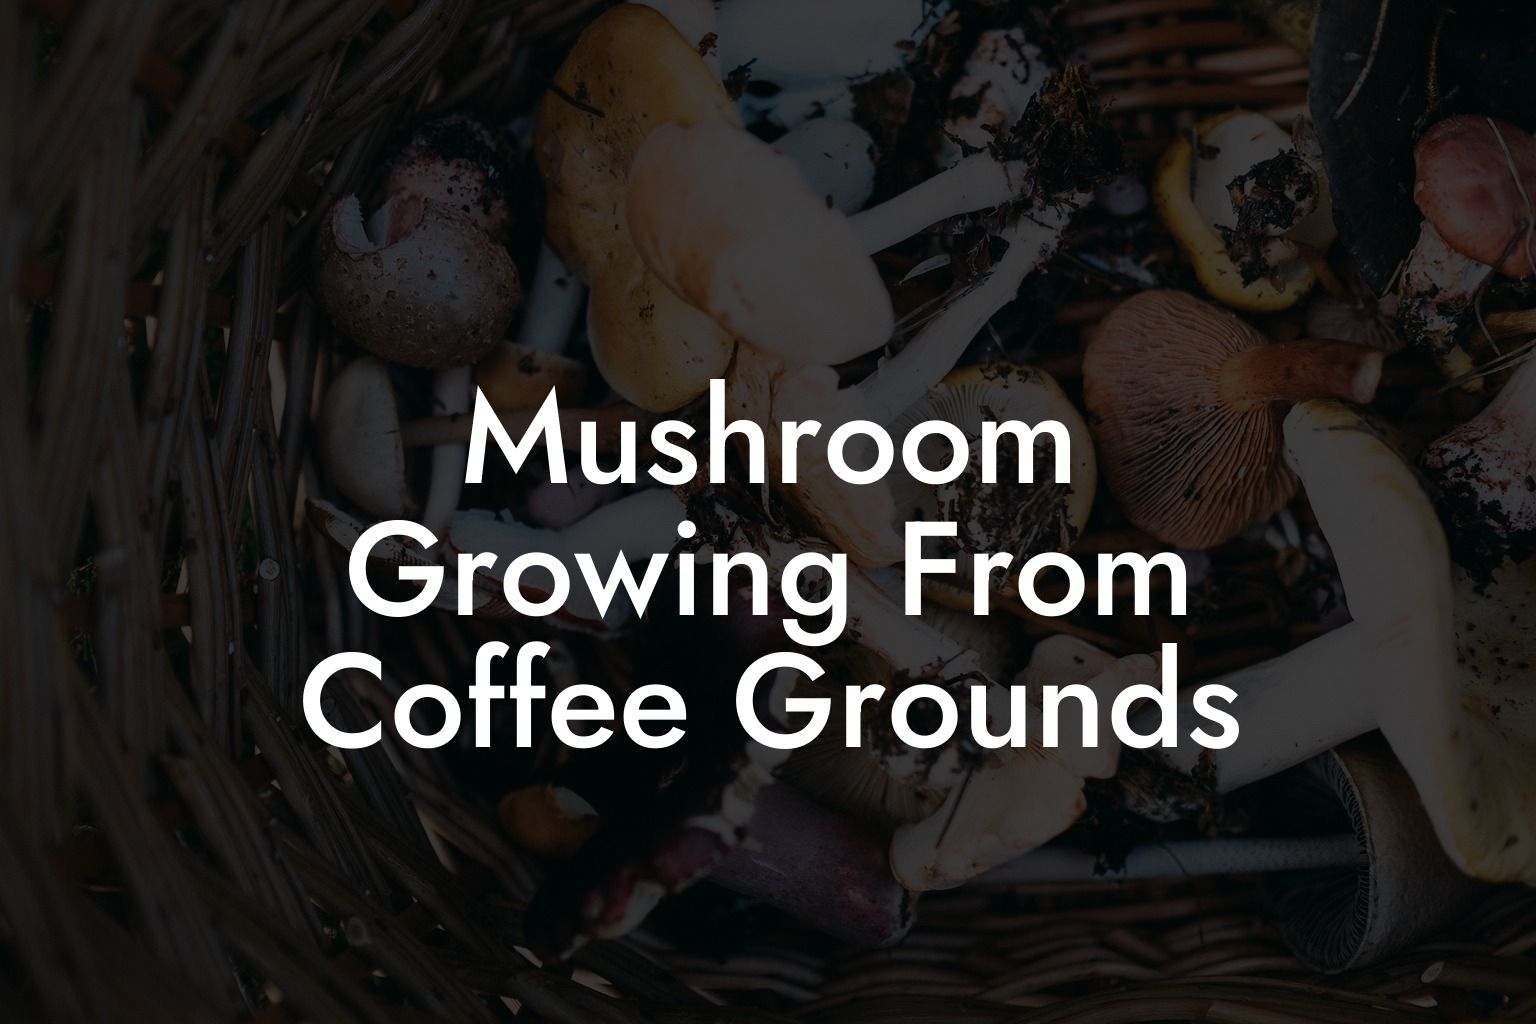 Mushroom Growing From Coffee Grounds